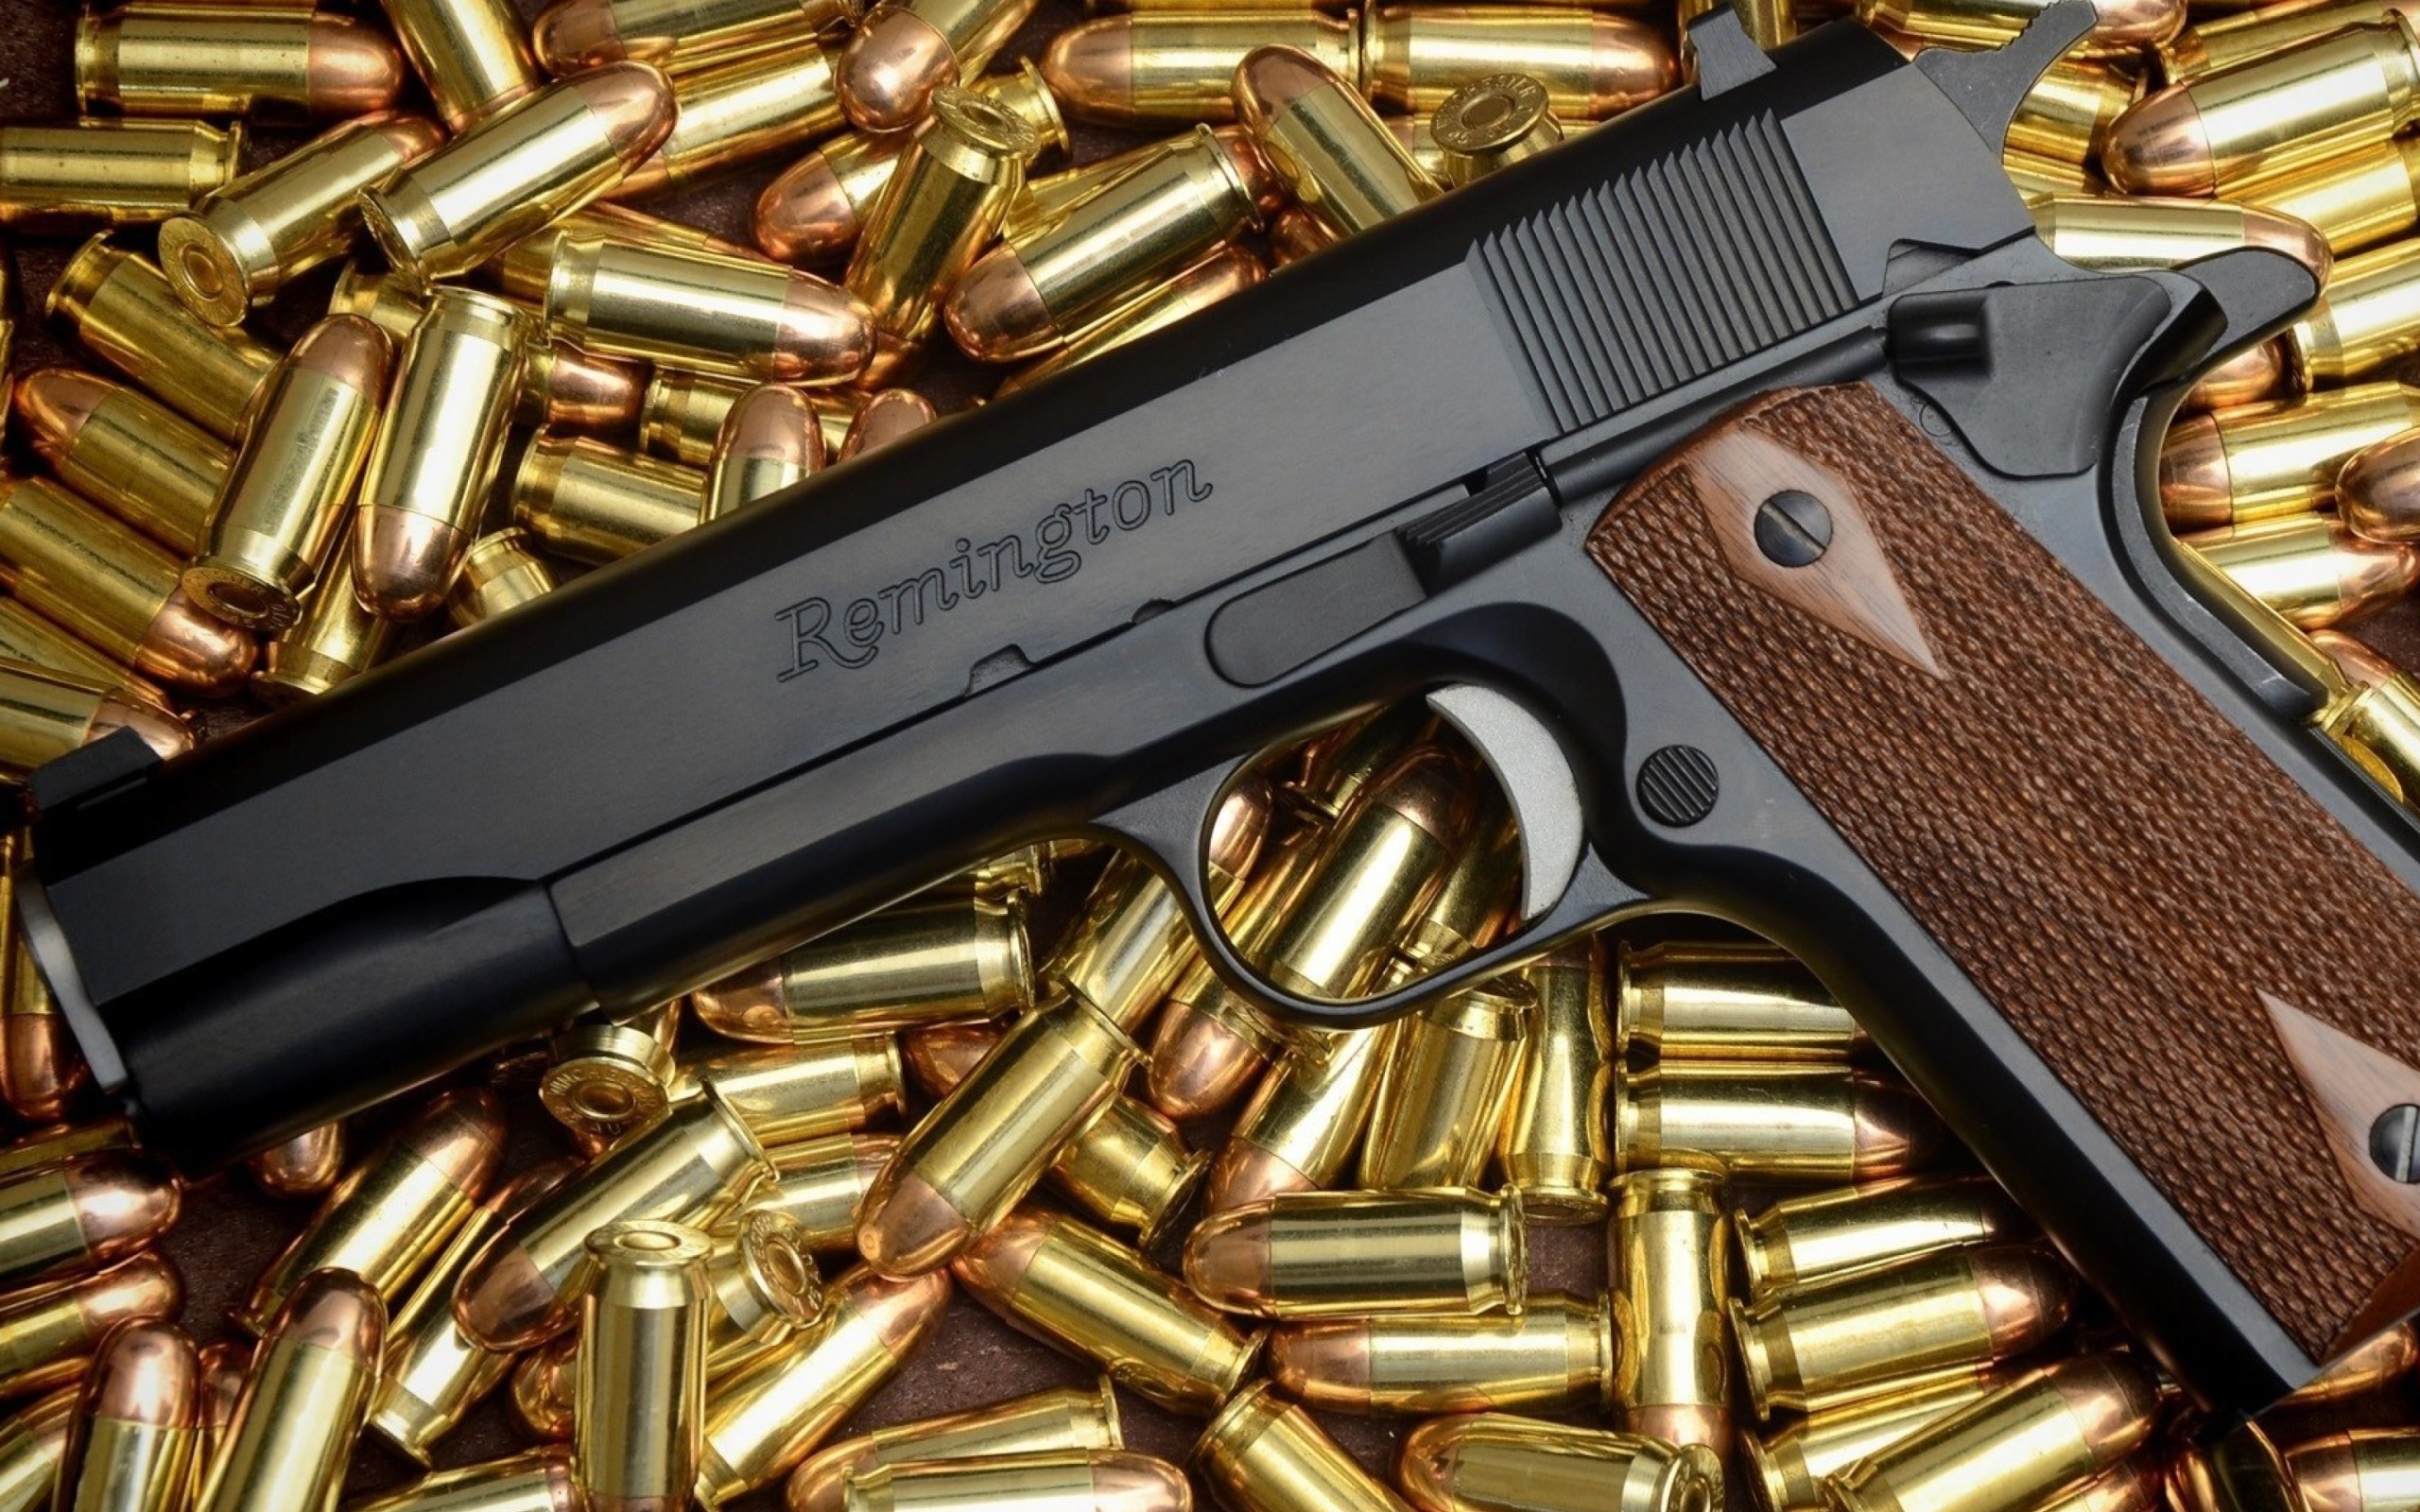 Das Pistol Remington Wallpaper 2560x1600